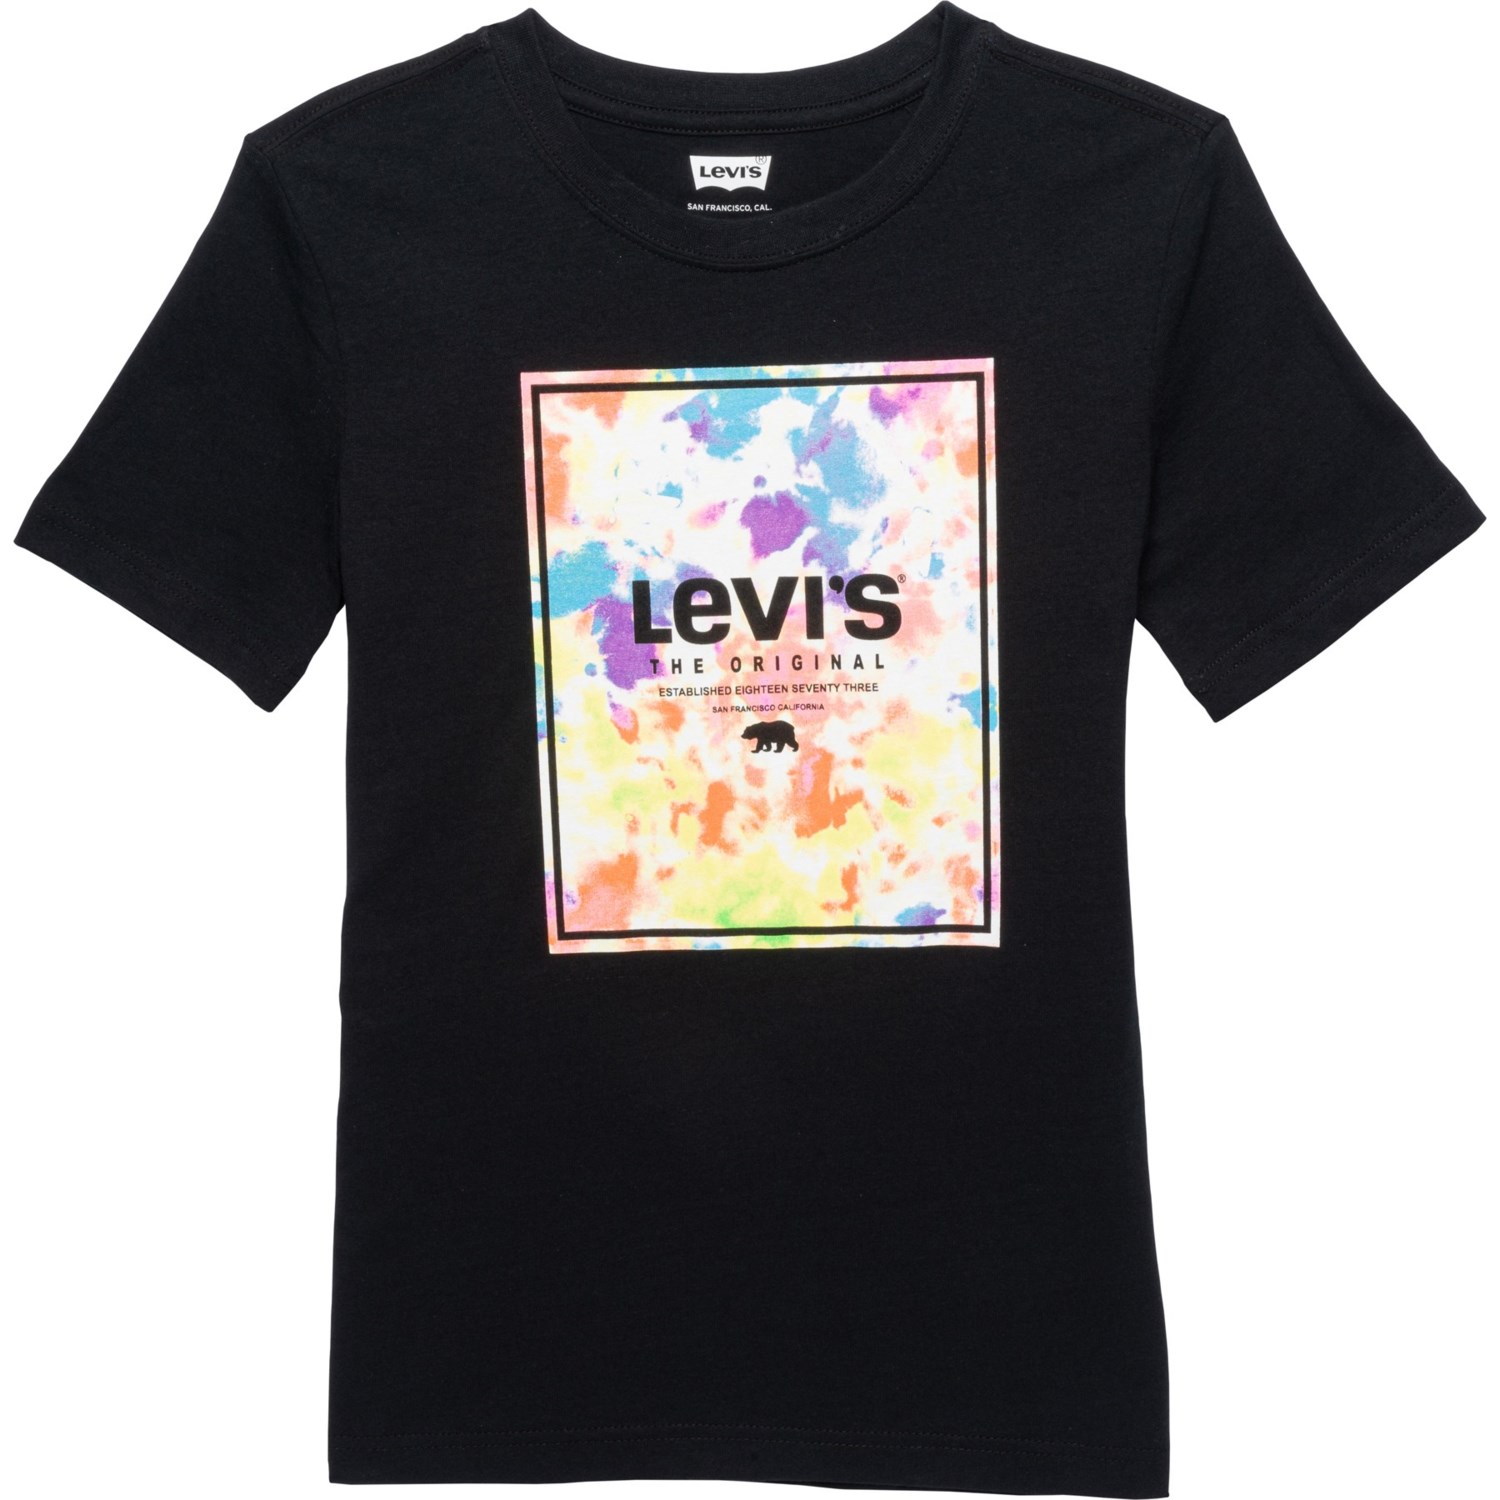 Levis Big Boys Logo T-Shirt - Short Sleeve